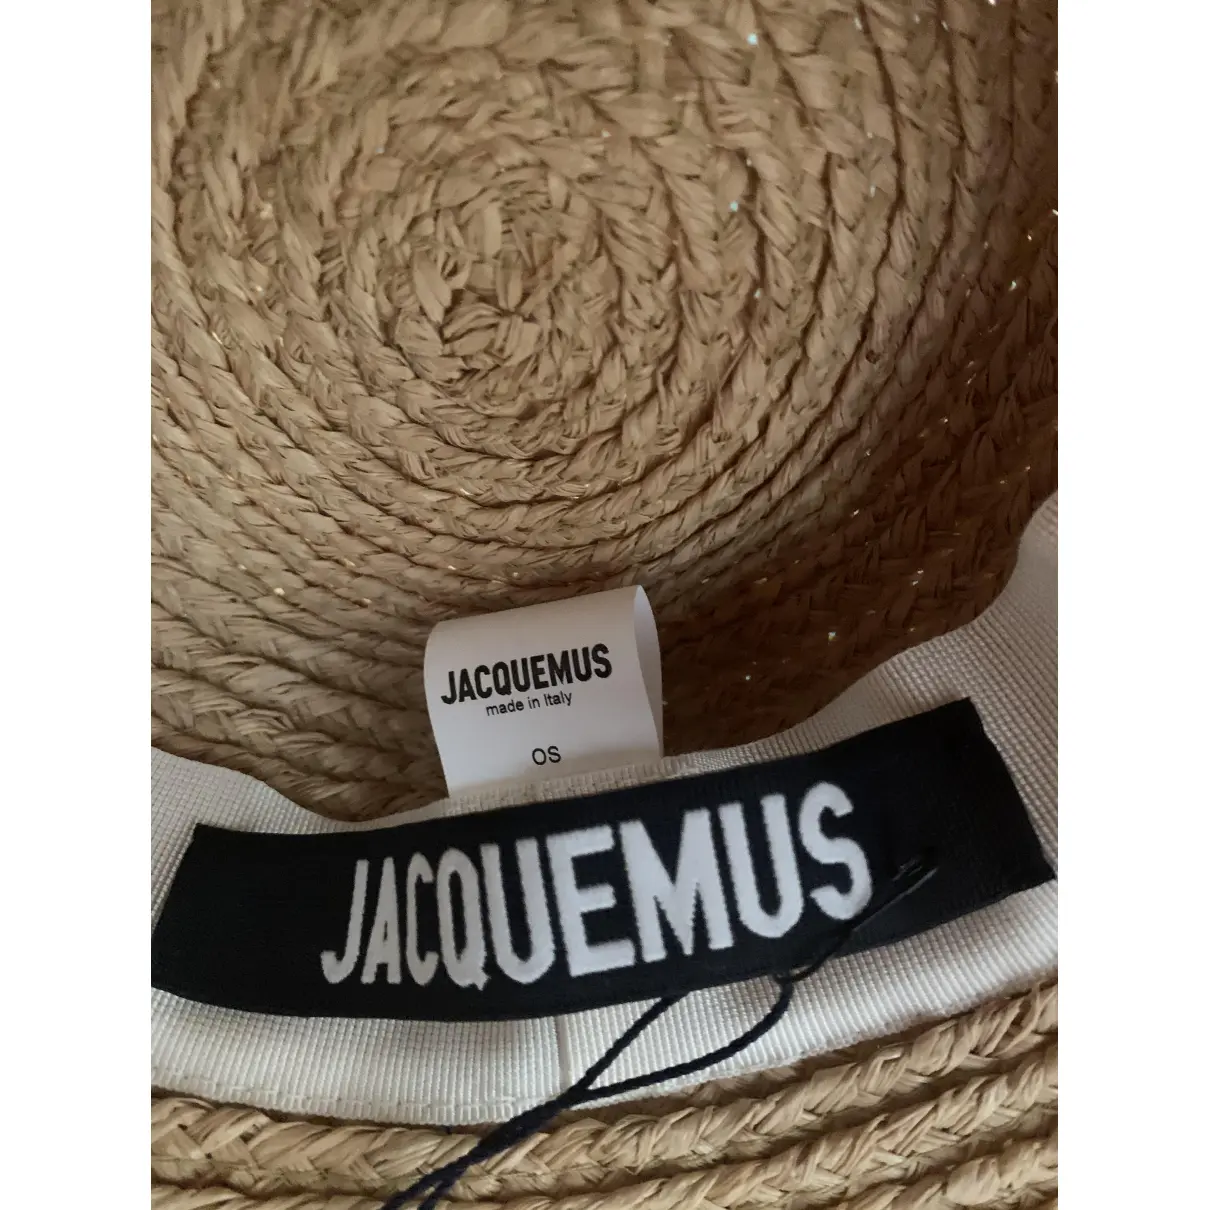 Buy Jacquemus Hat online